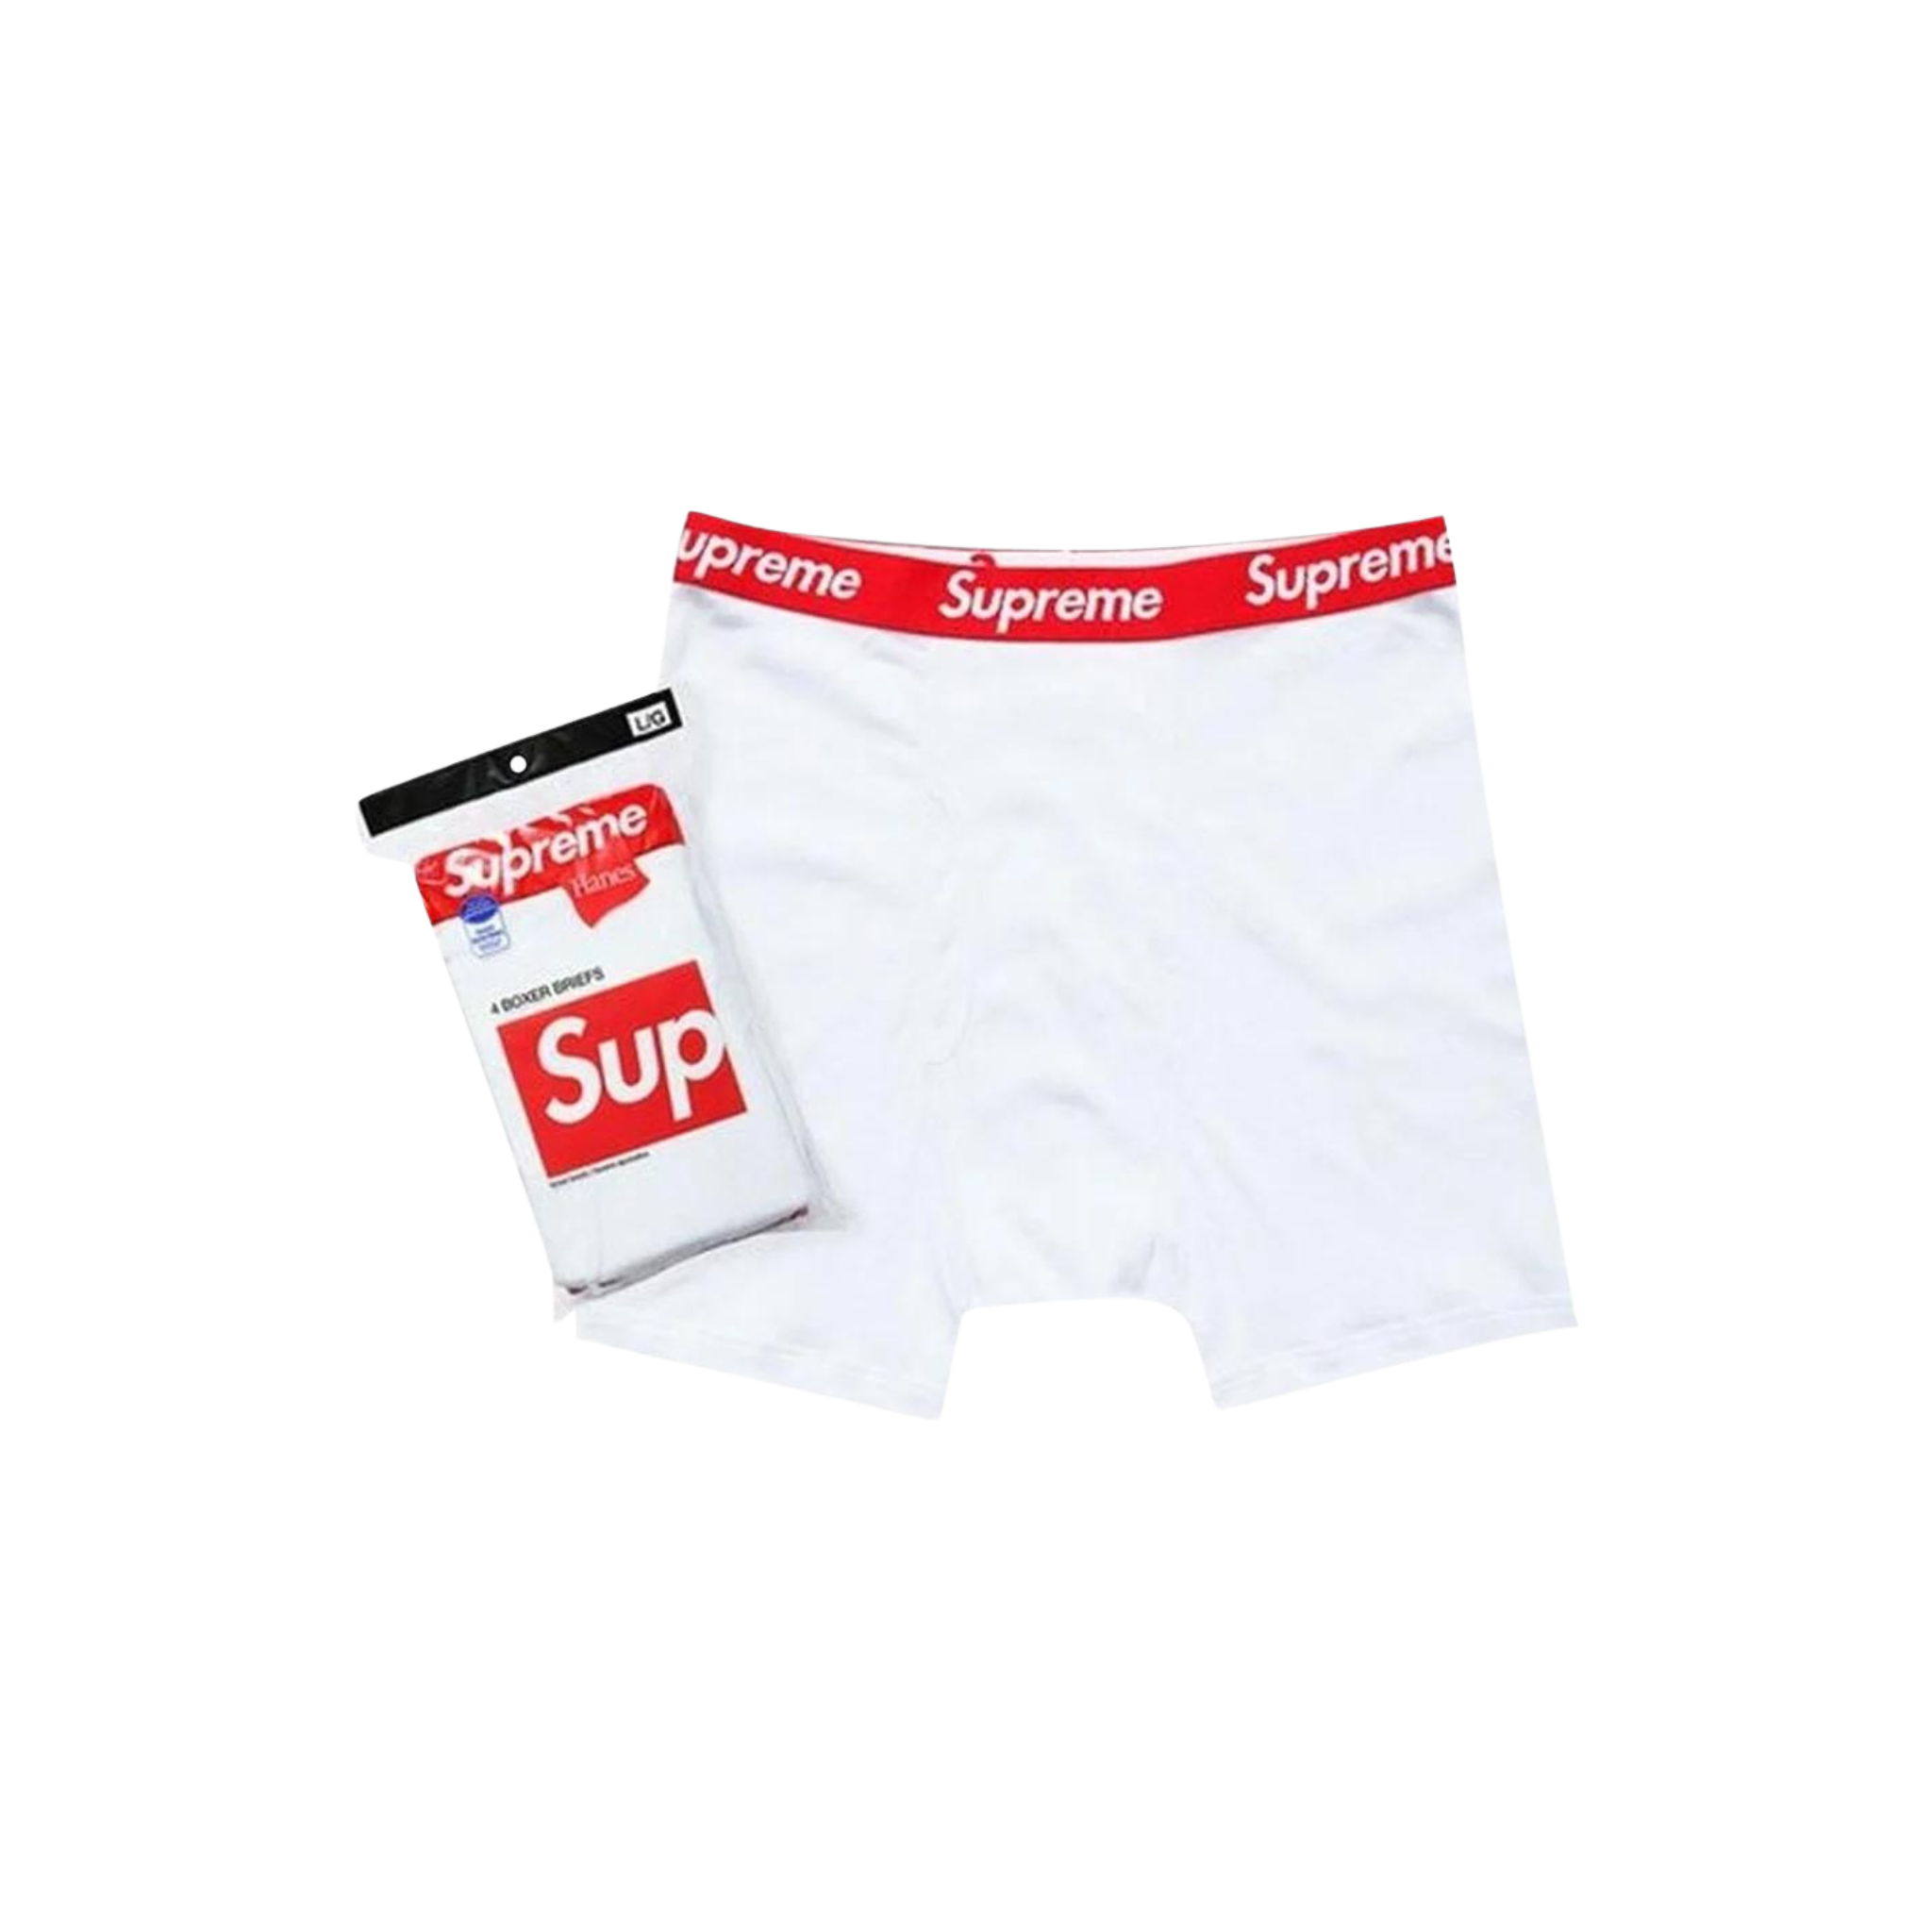 Supreme x Hanes Boxer Briefs 'White' (Boxer shorts)